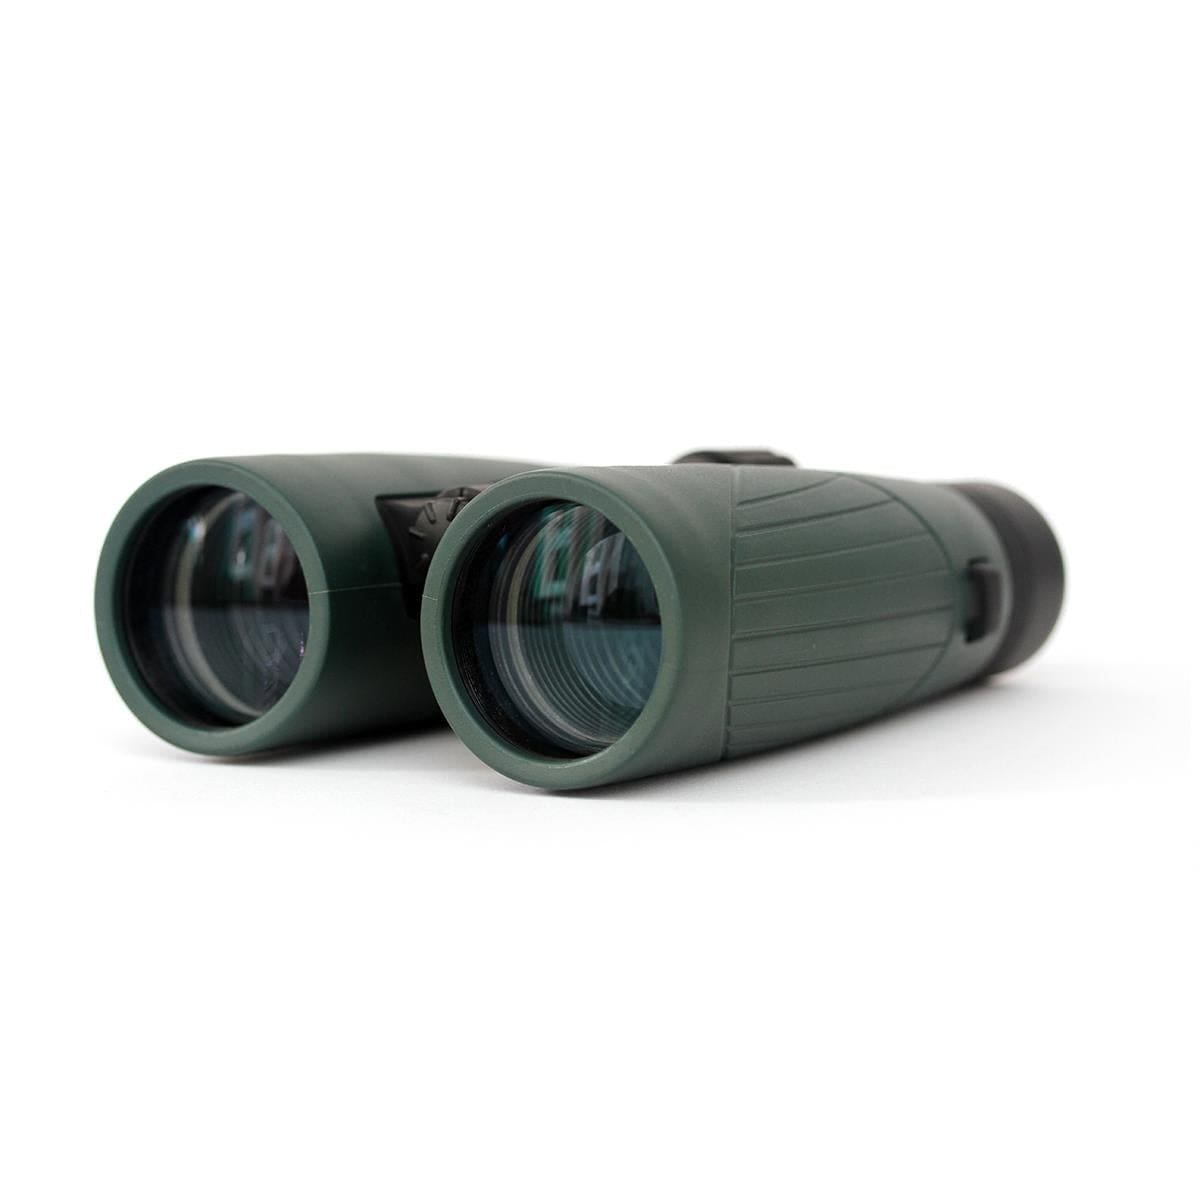 Fortis XSR Binoculars 8 x 42 (Waterproof &amp; FogProof).